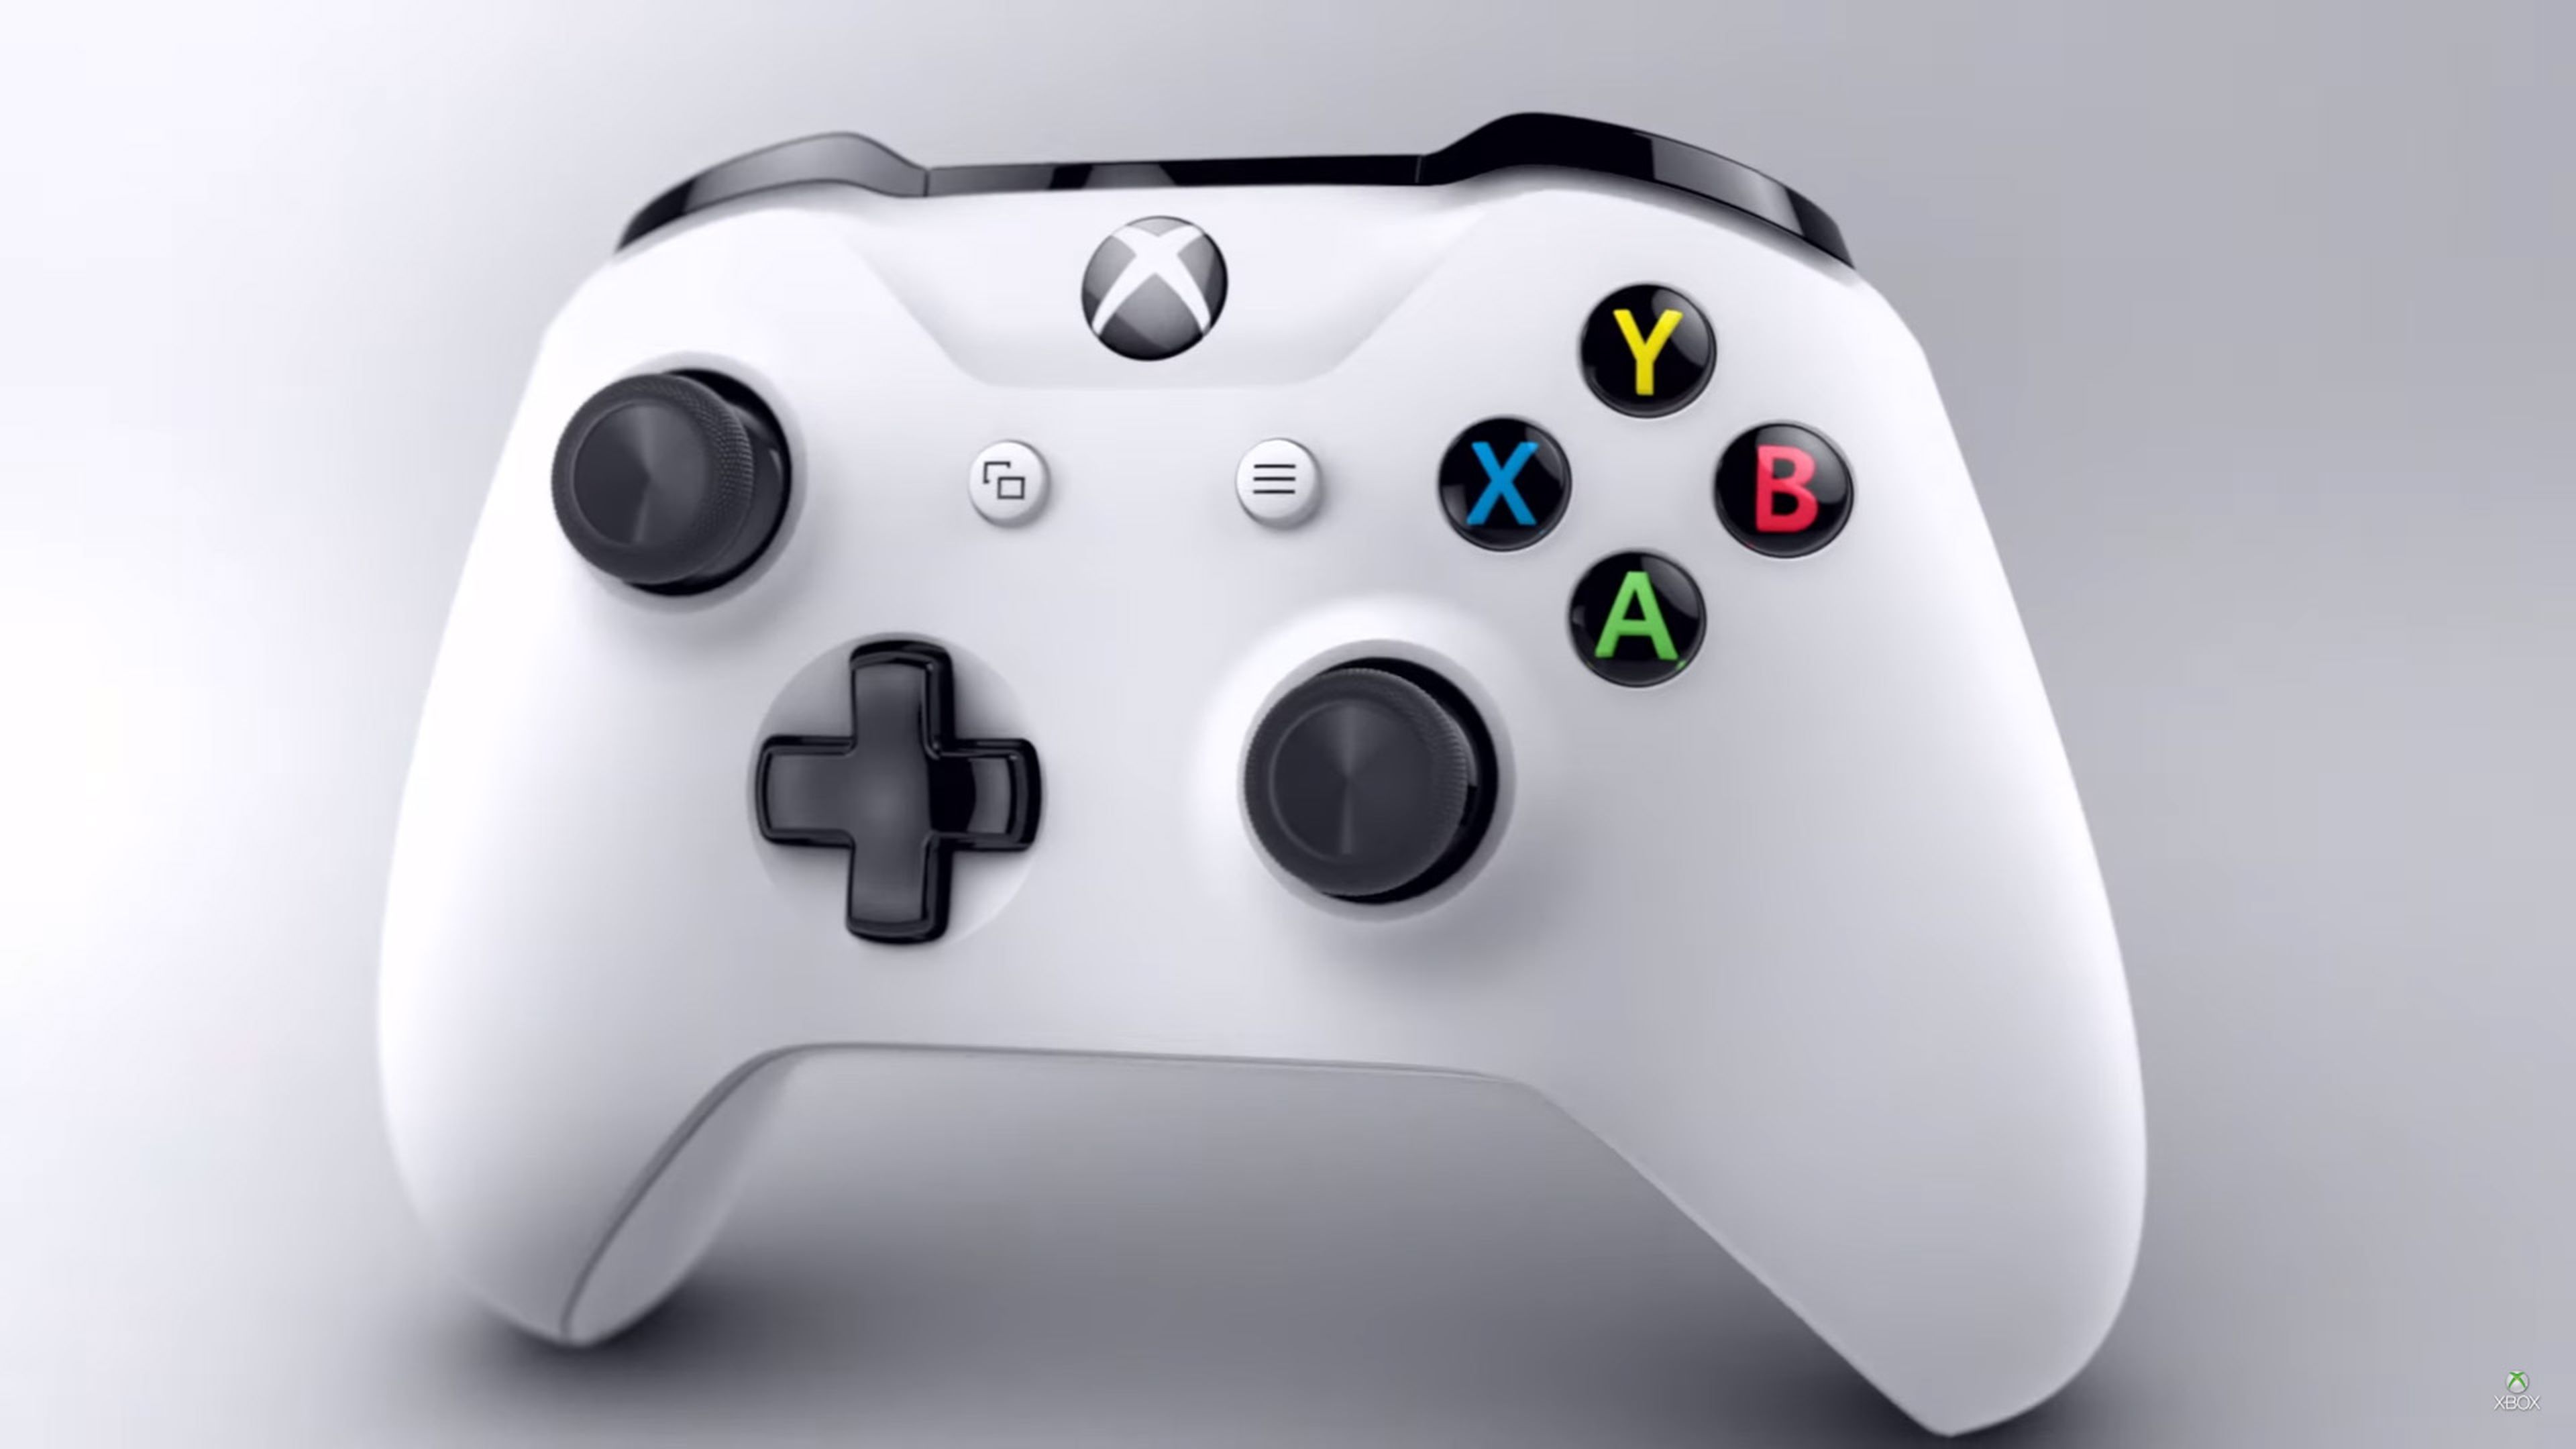 Xbox one s controller. Xbox one Controller White. Xbox 360. Xbox 360 fat геймпад оригинал. Xbox one s.